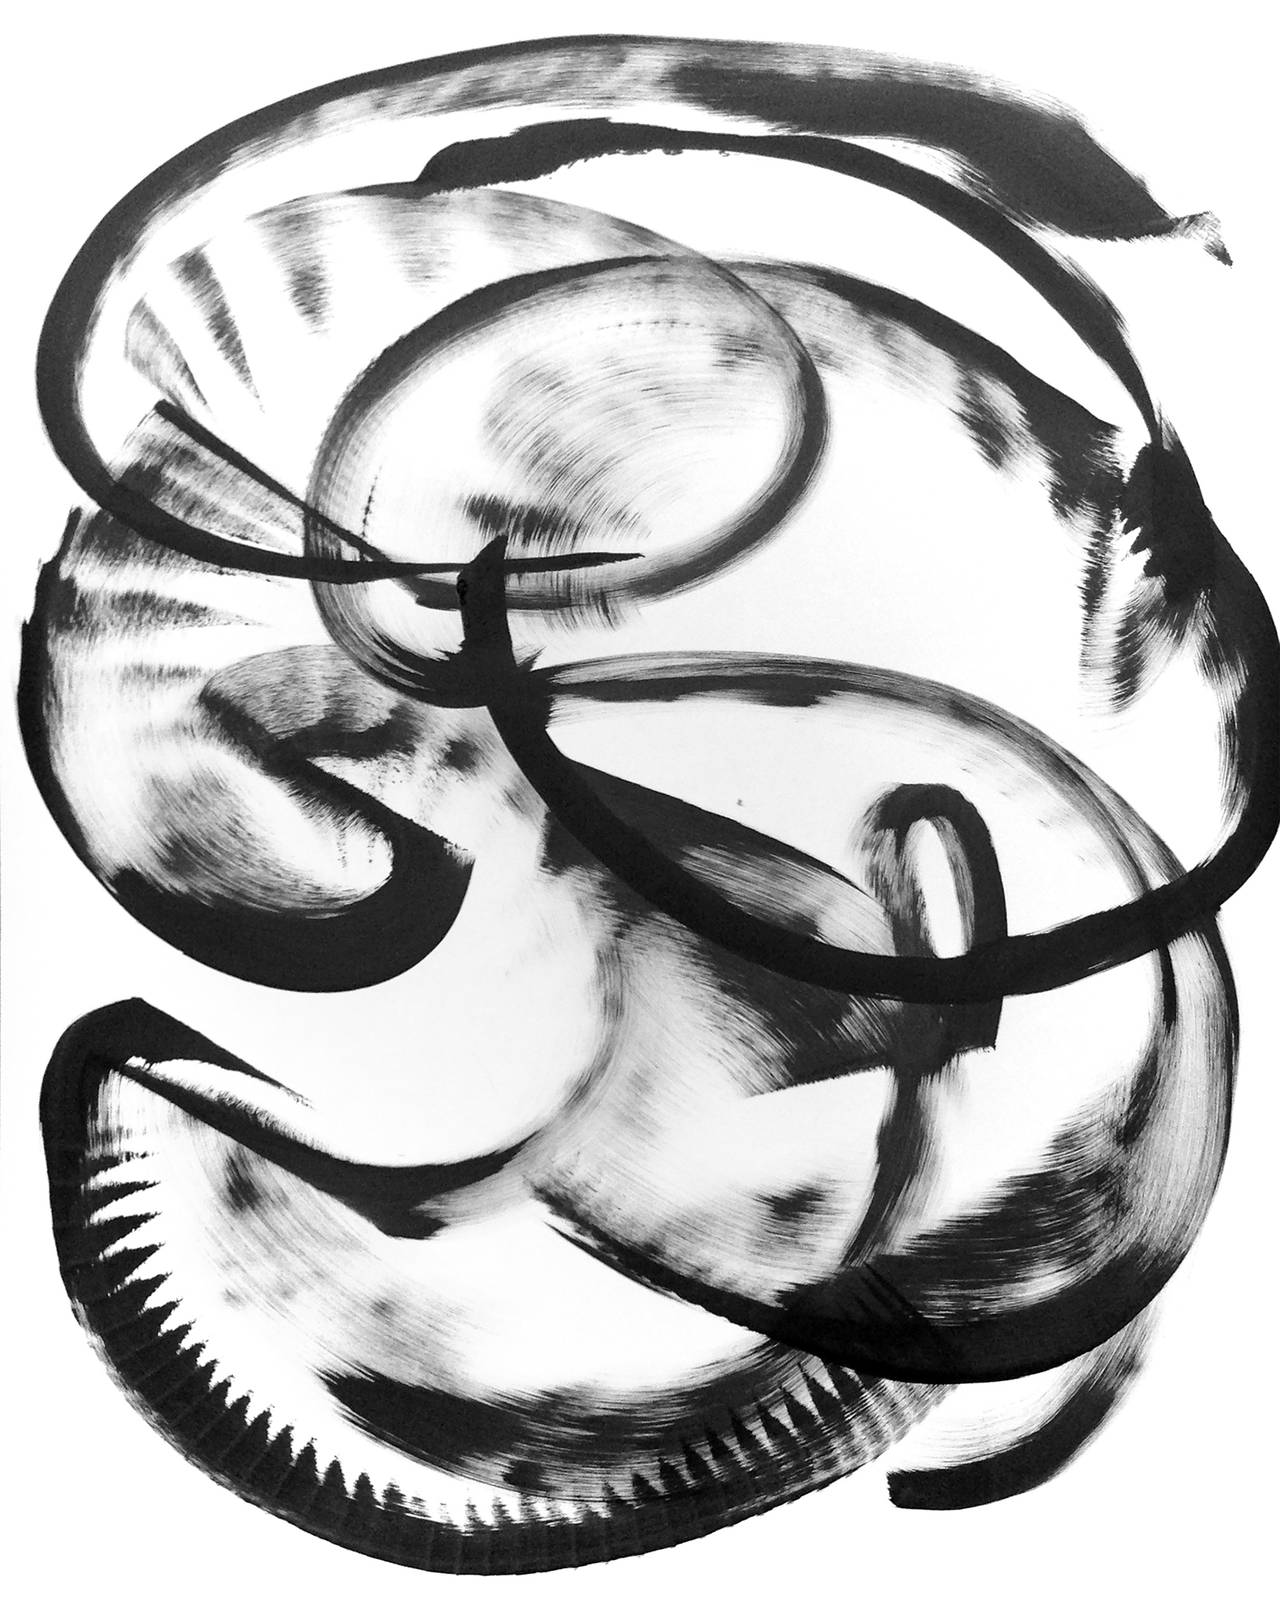 Thomas Hammer Abstract Drawing - Chamaecyparis Eureka - Original Black and White Abstract Calligraphy Painting